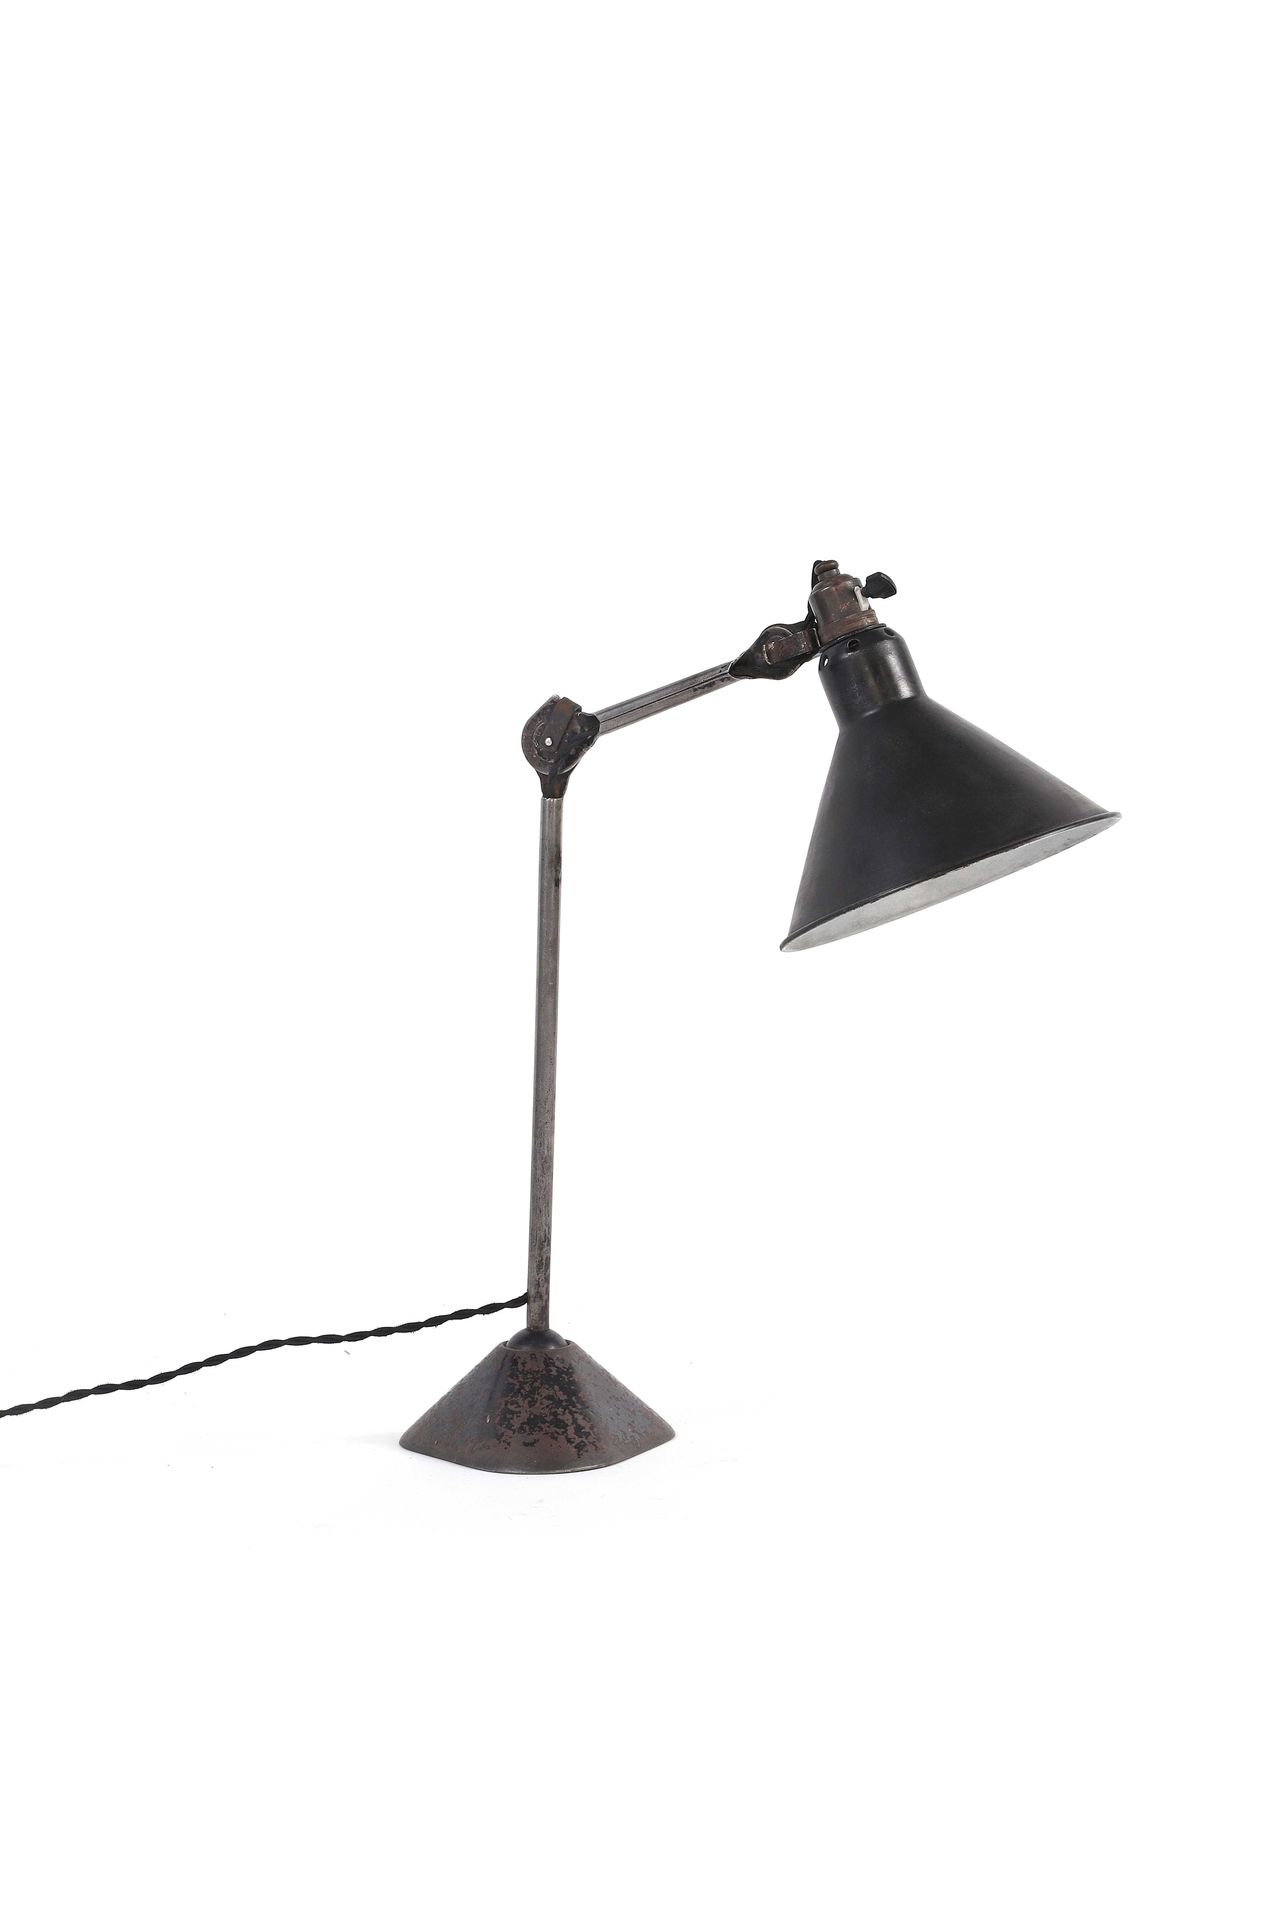 Bernard Albin GRAS (1886-1943) Lamp called 205 
Steel, aluminum
H. 52 cm.
Gras, &hellip;